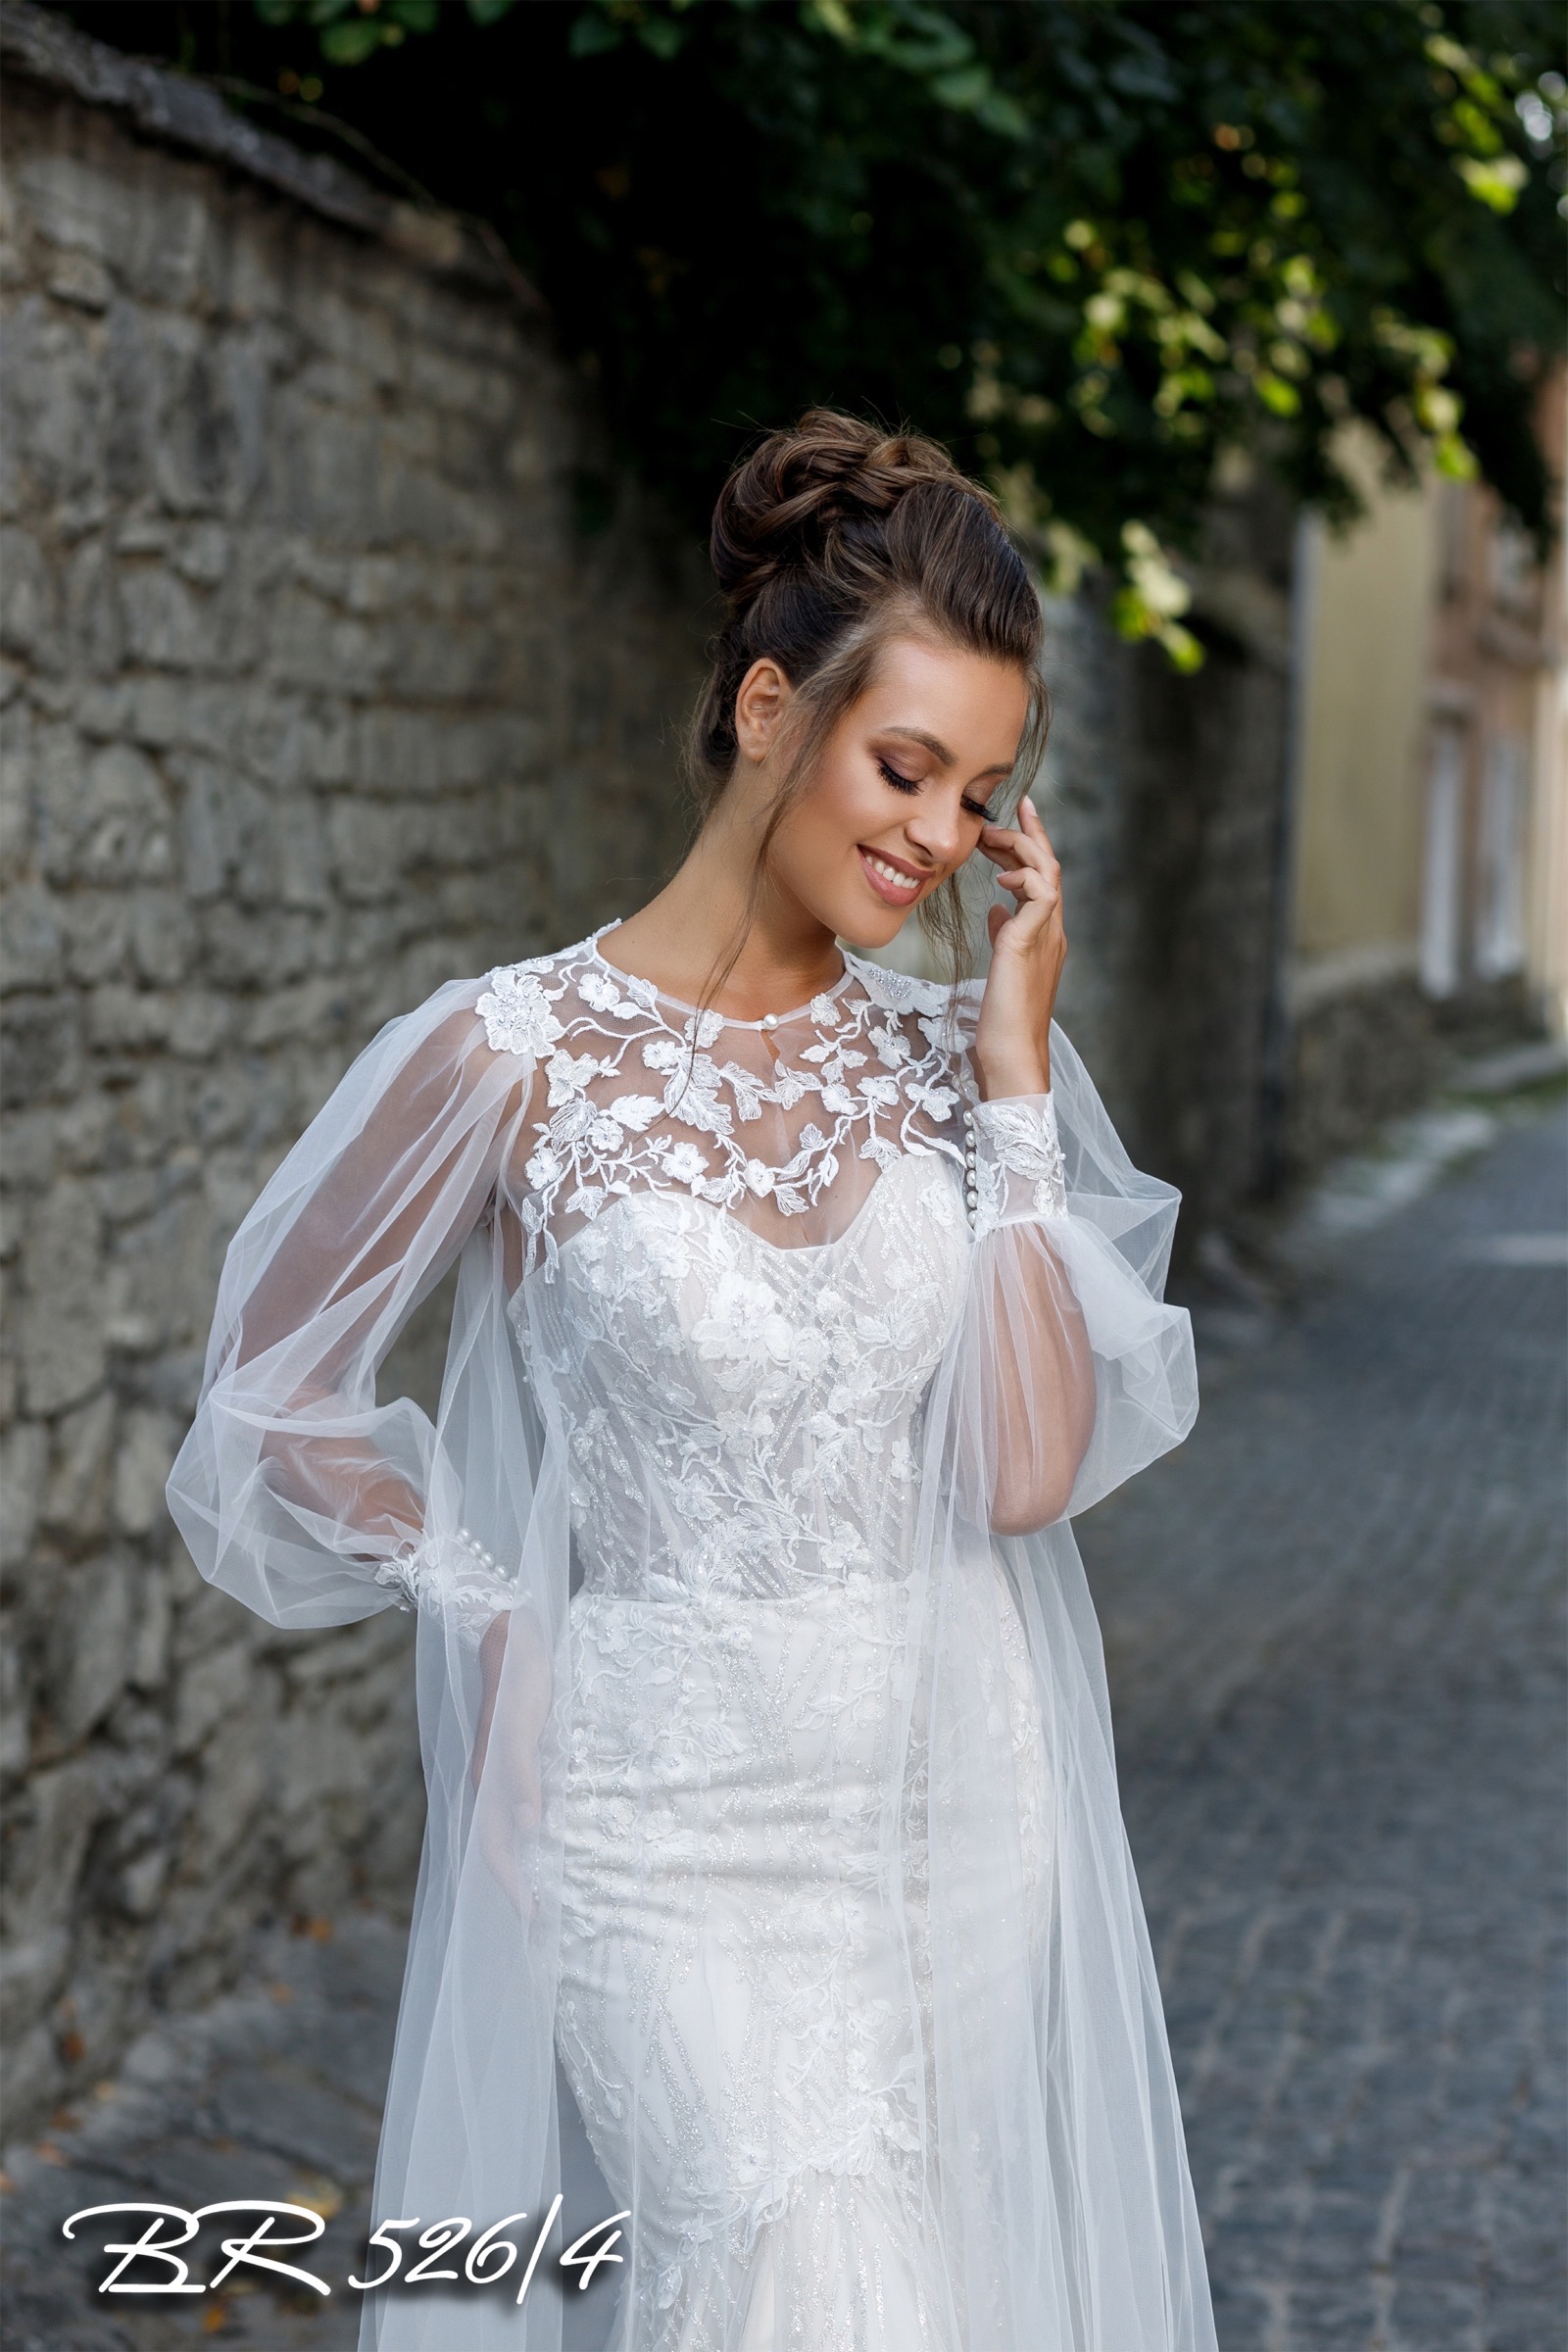 2020 wedding dress sweetheart neckline strapless trumpet silhouette skirt details court train lace embroidery detachable long sleeve cape